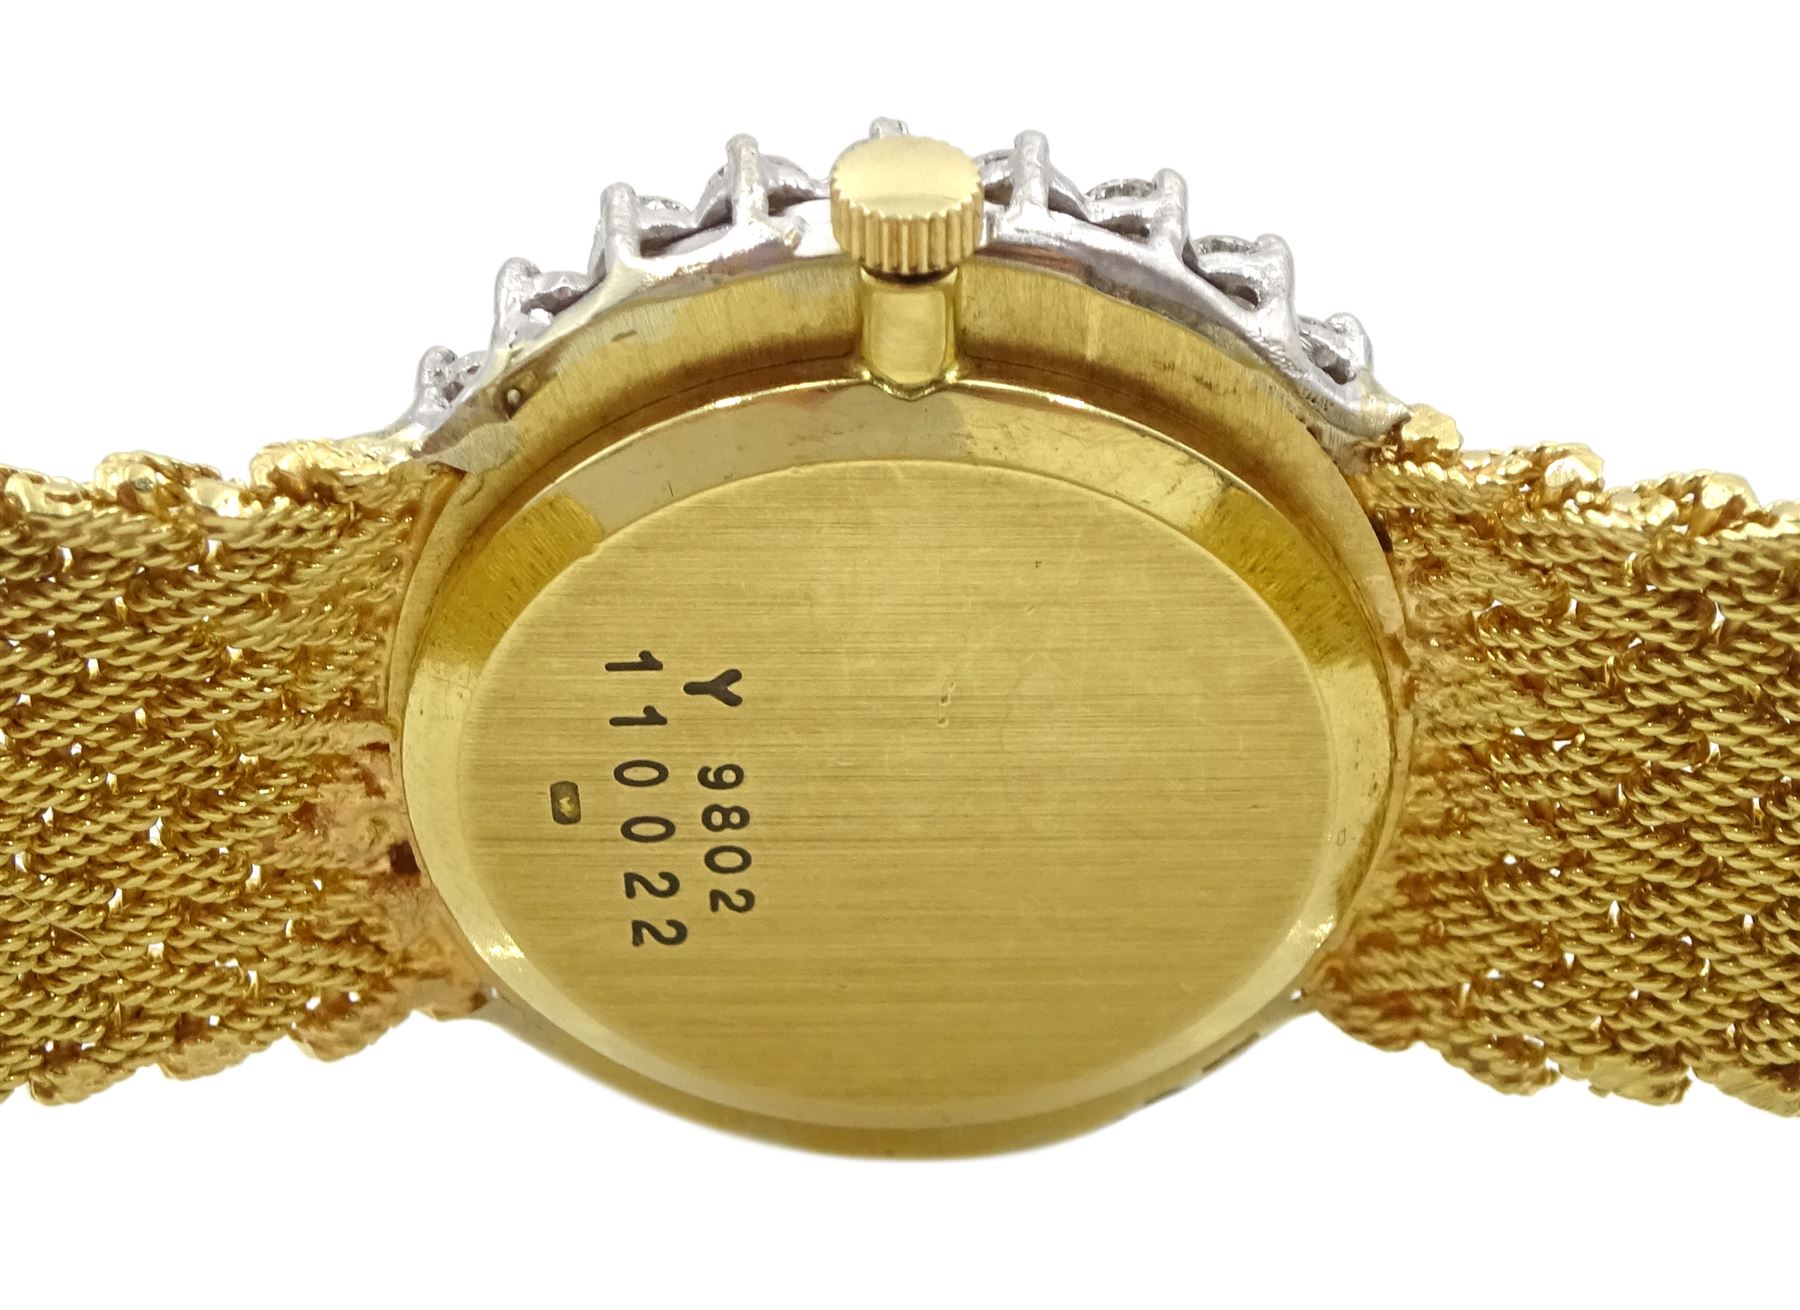 Bueche Girod ladies 18ct gold manual wind wristwatch - Image 4 of 4